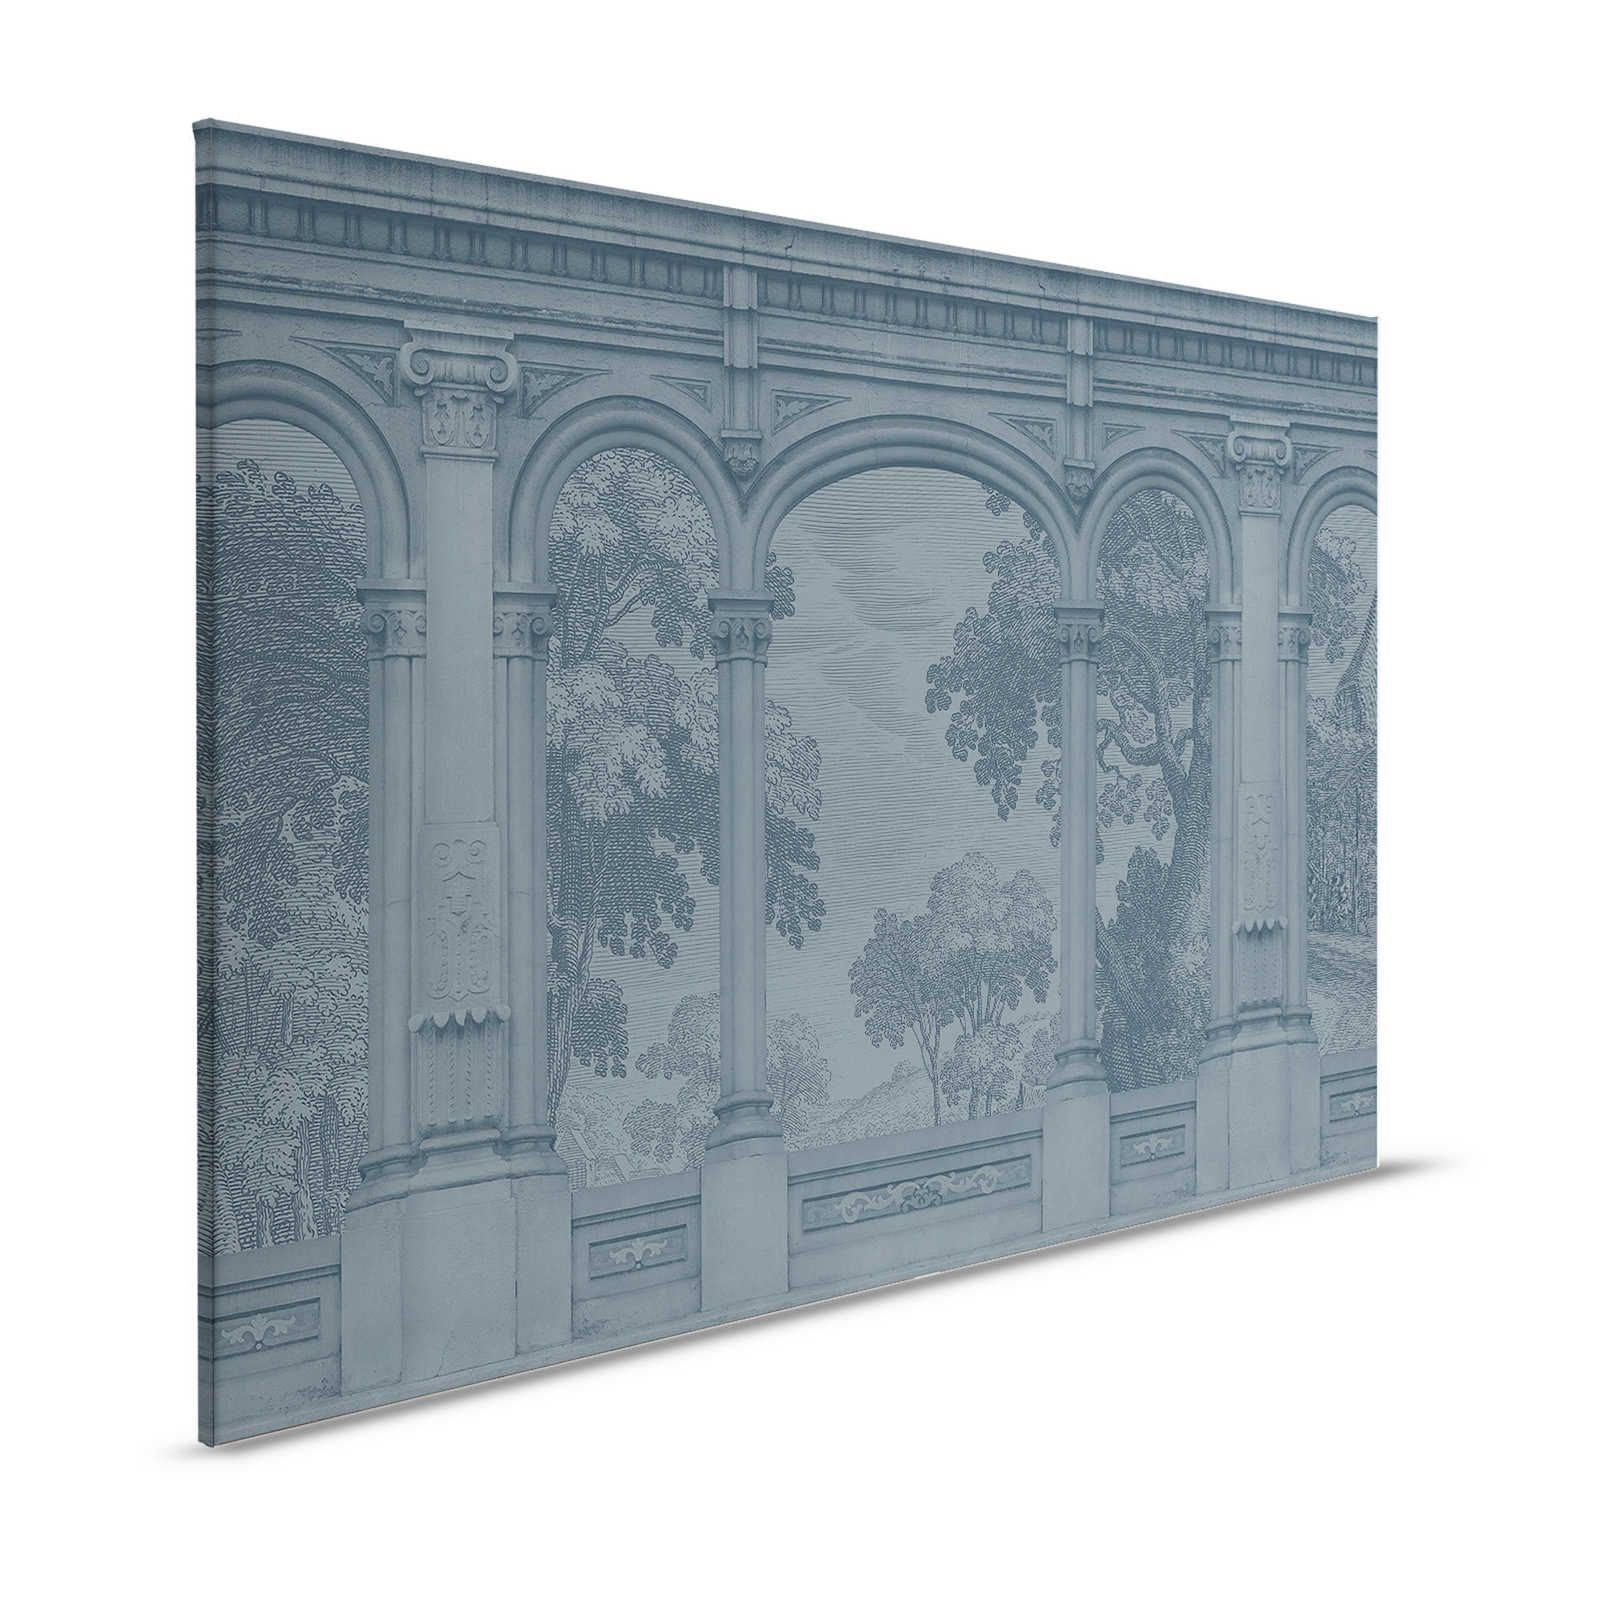 Roma 4 - Canvas schilderij architectuur klassiek ontwerp in antraciet - 1,20 m x 0,80 m
